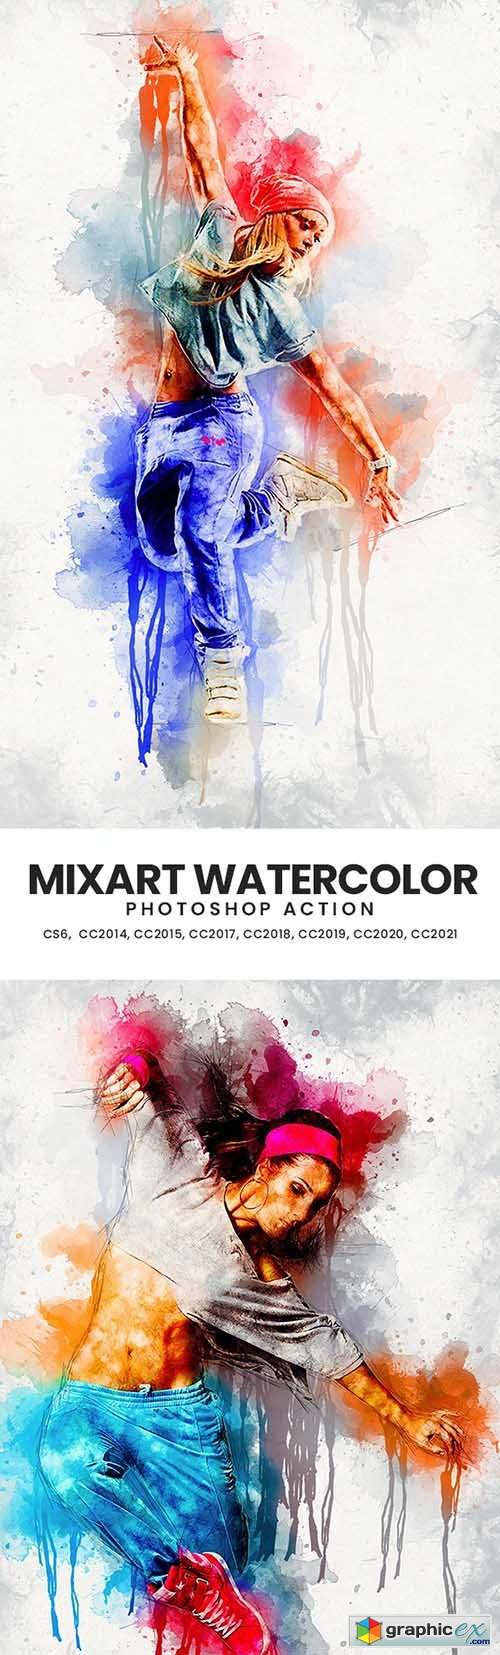 MixArt Watercolor Photoshop Action 